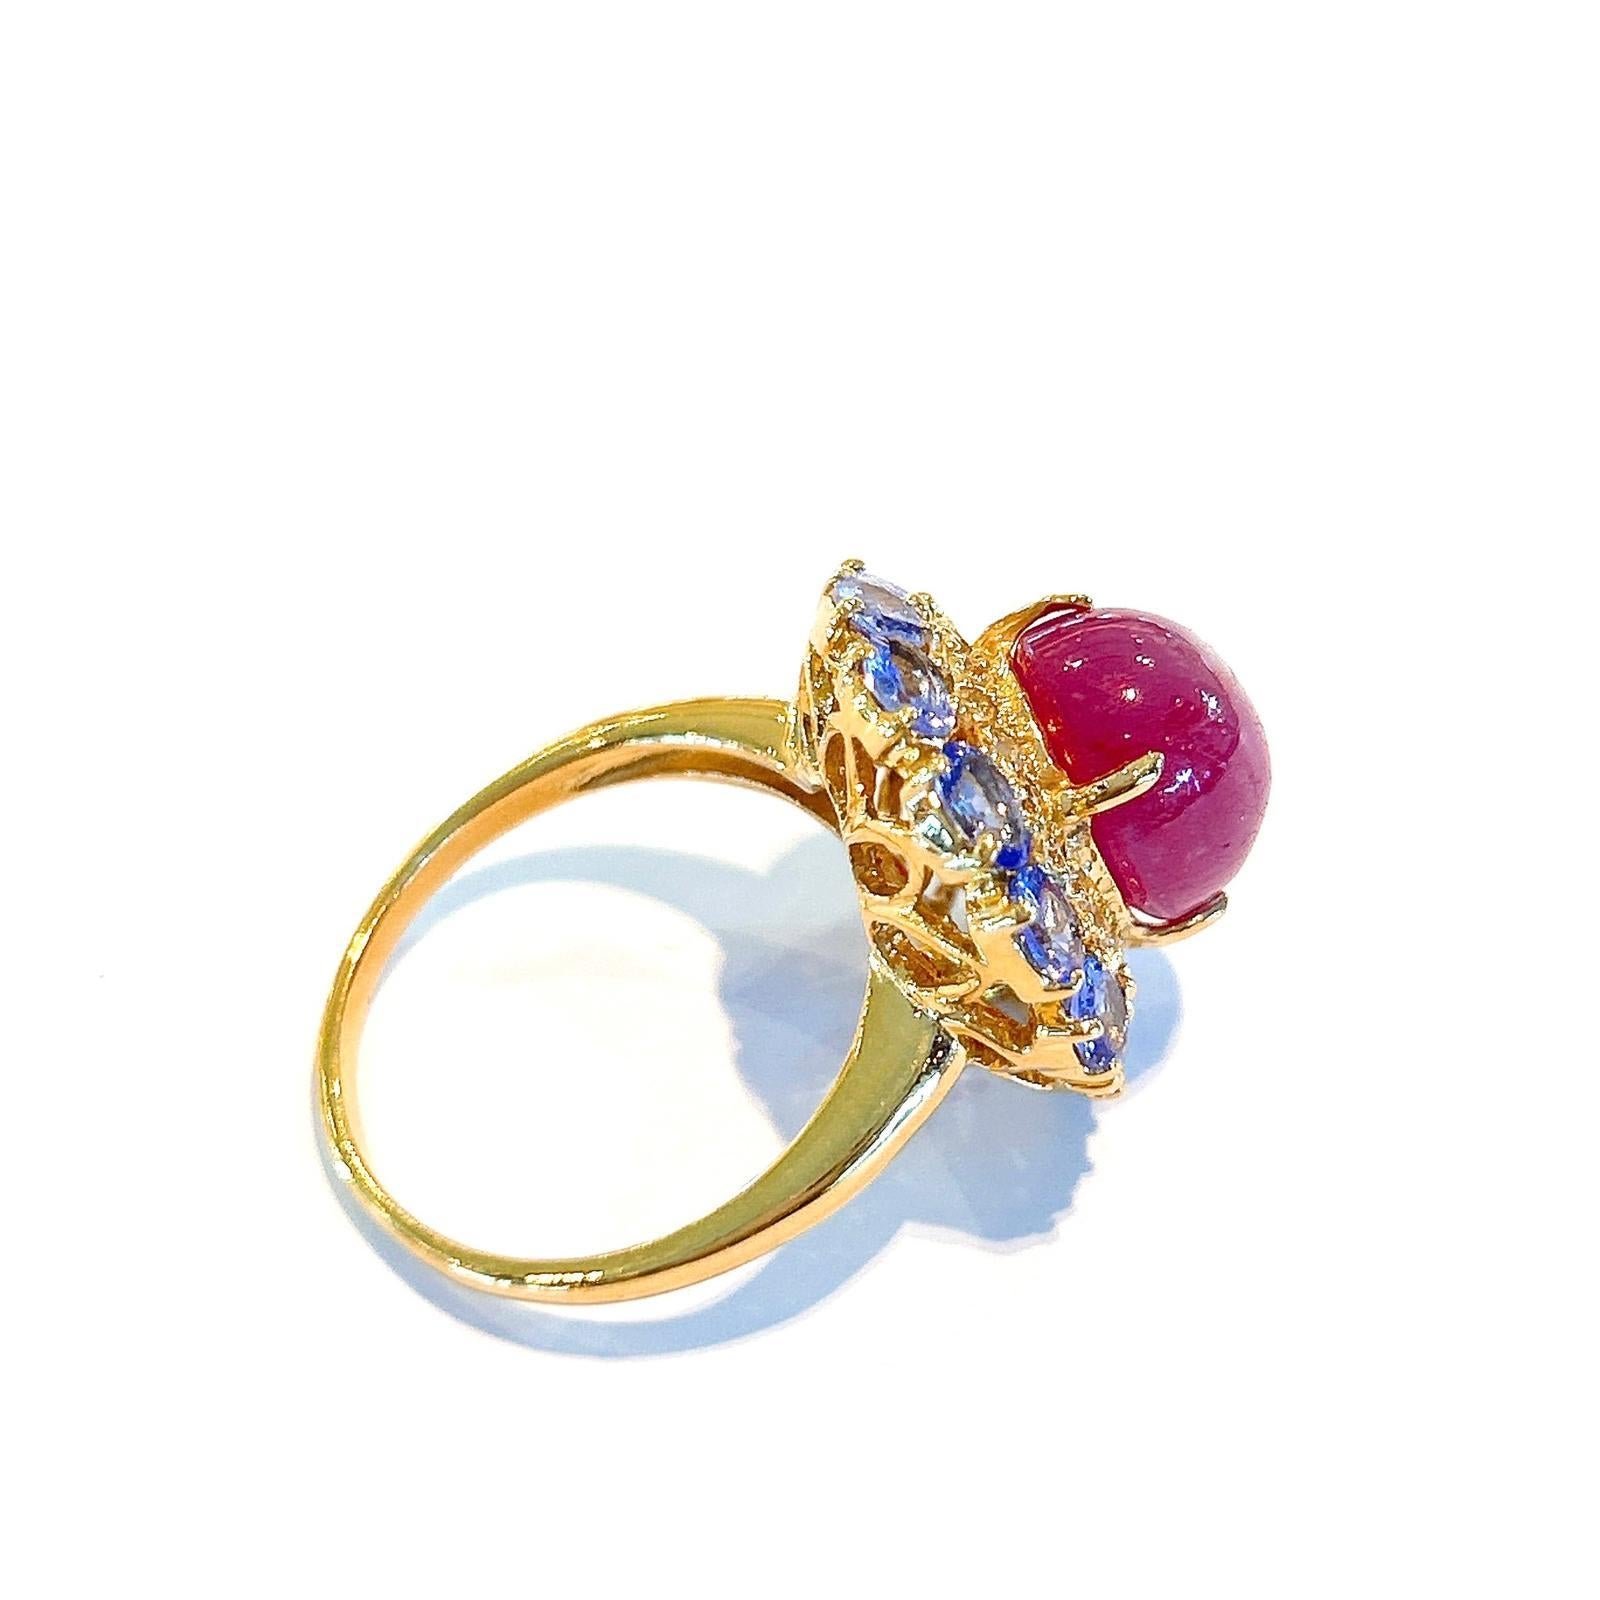 Bochic “Capri” Multi Natural Gem Ring Set in 22k Gold & Silver In New Condition For Sale In New York, NY